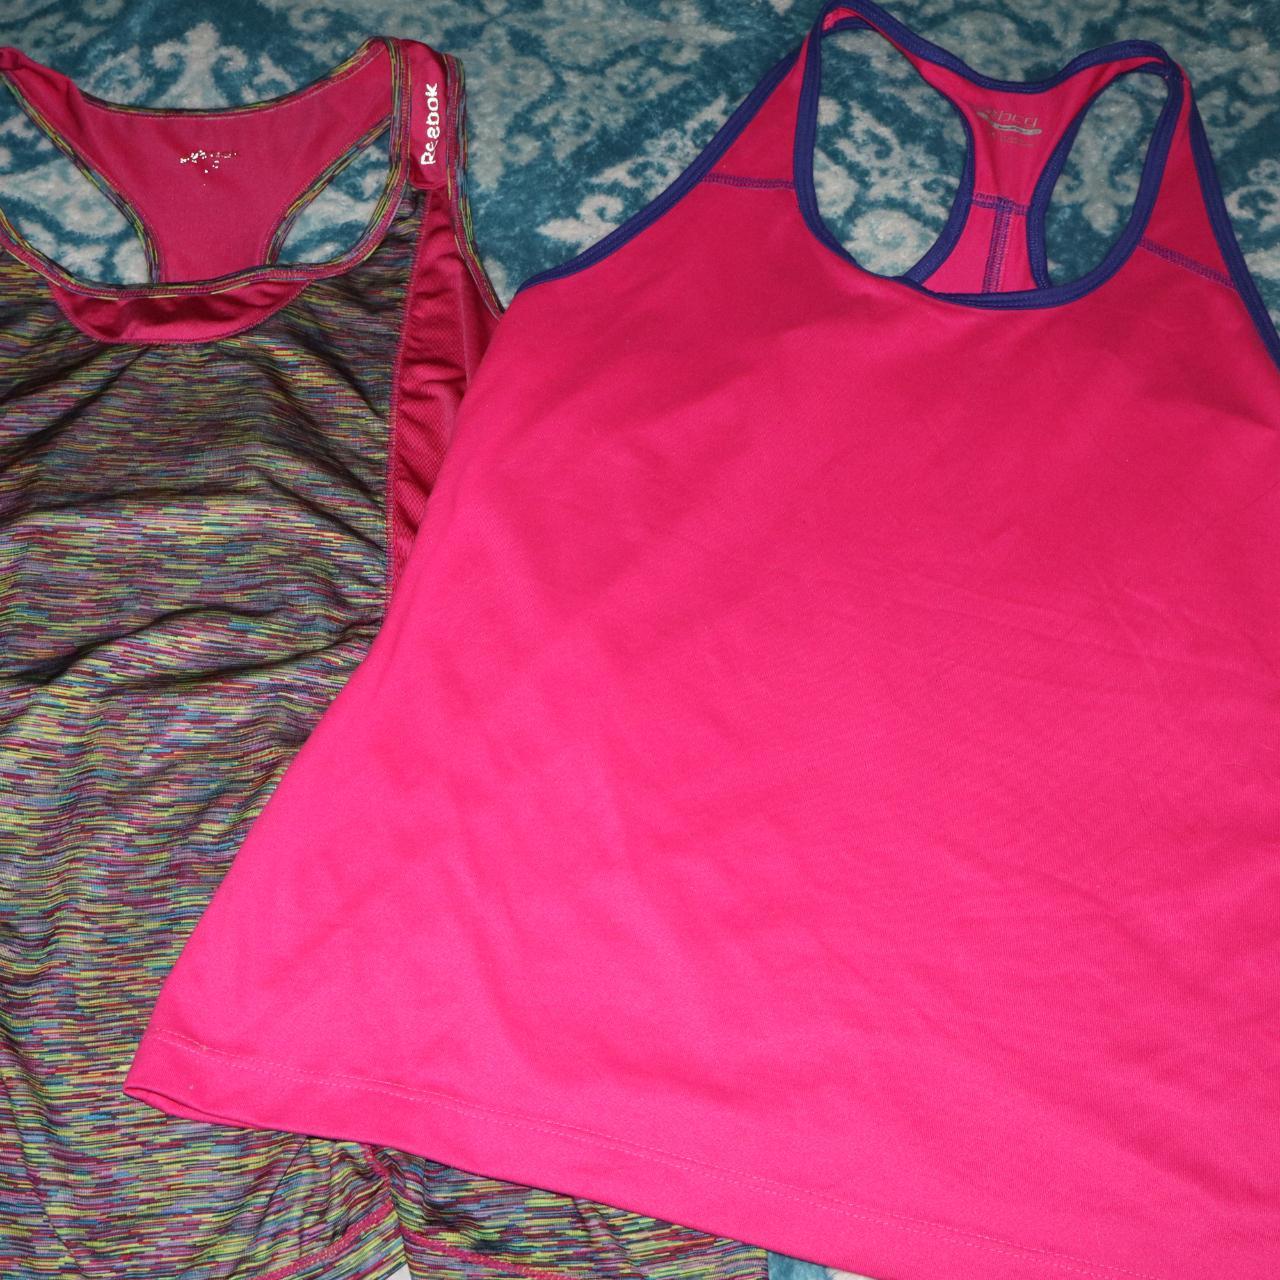 Bundle Workout Shirts, REEBOK & BCG Pink Racerback... - Depop